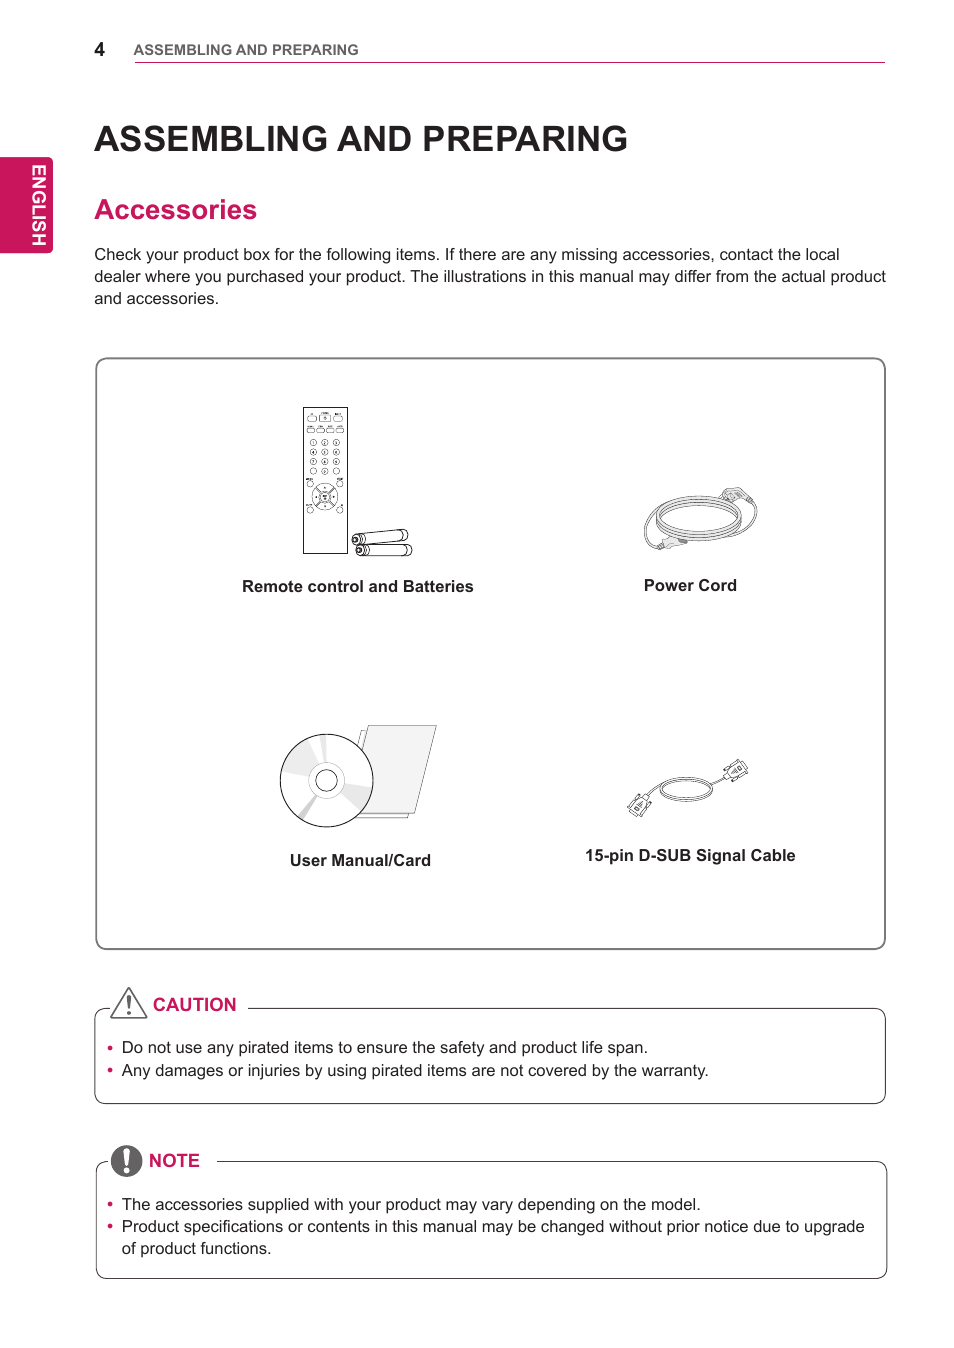 Assembling and preparing, Accessories, Assembling and | Preparing | LG 47VL10 User Manual | Page 4 / 48